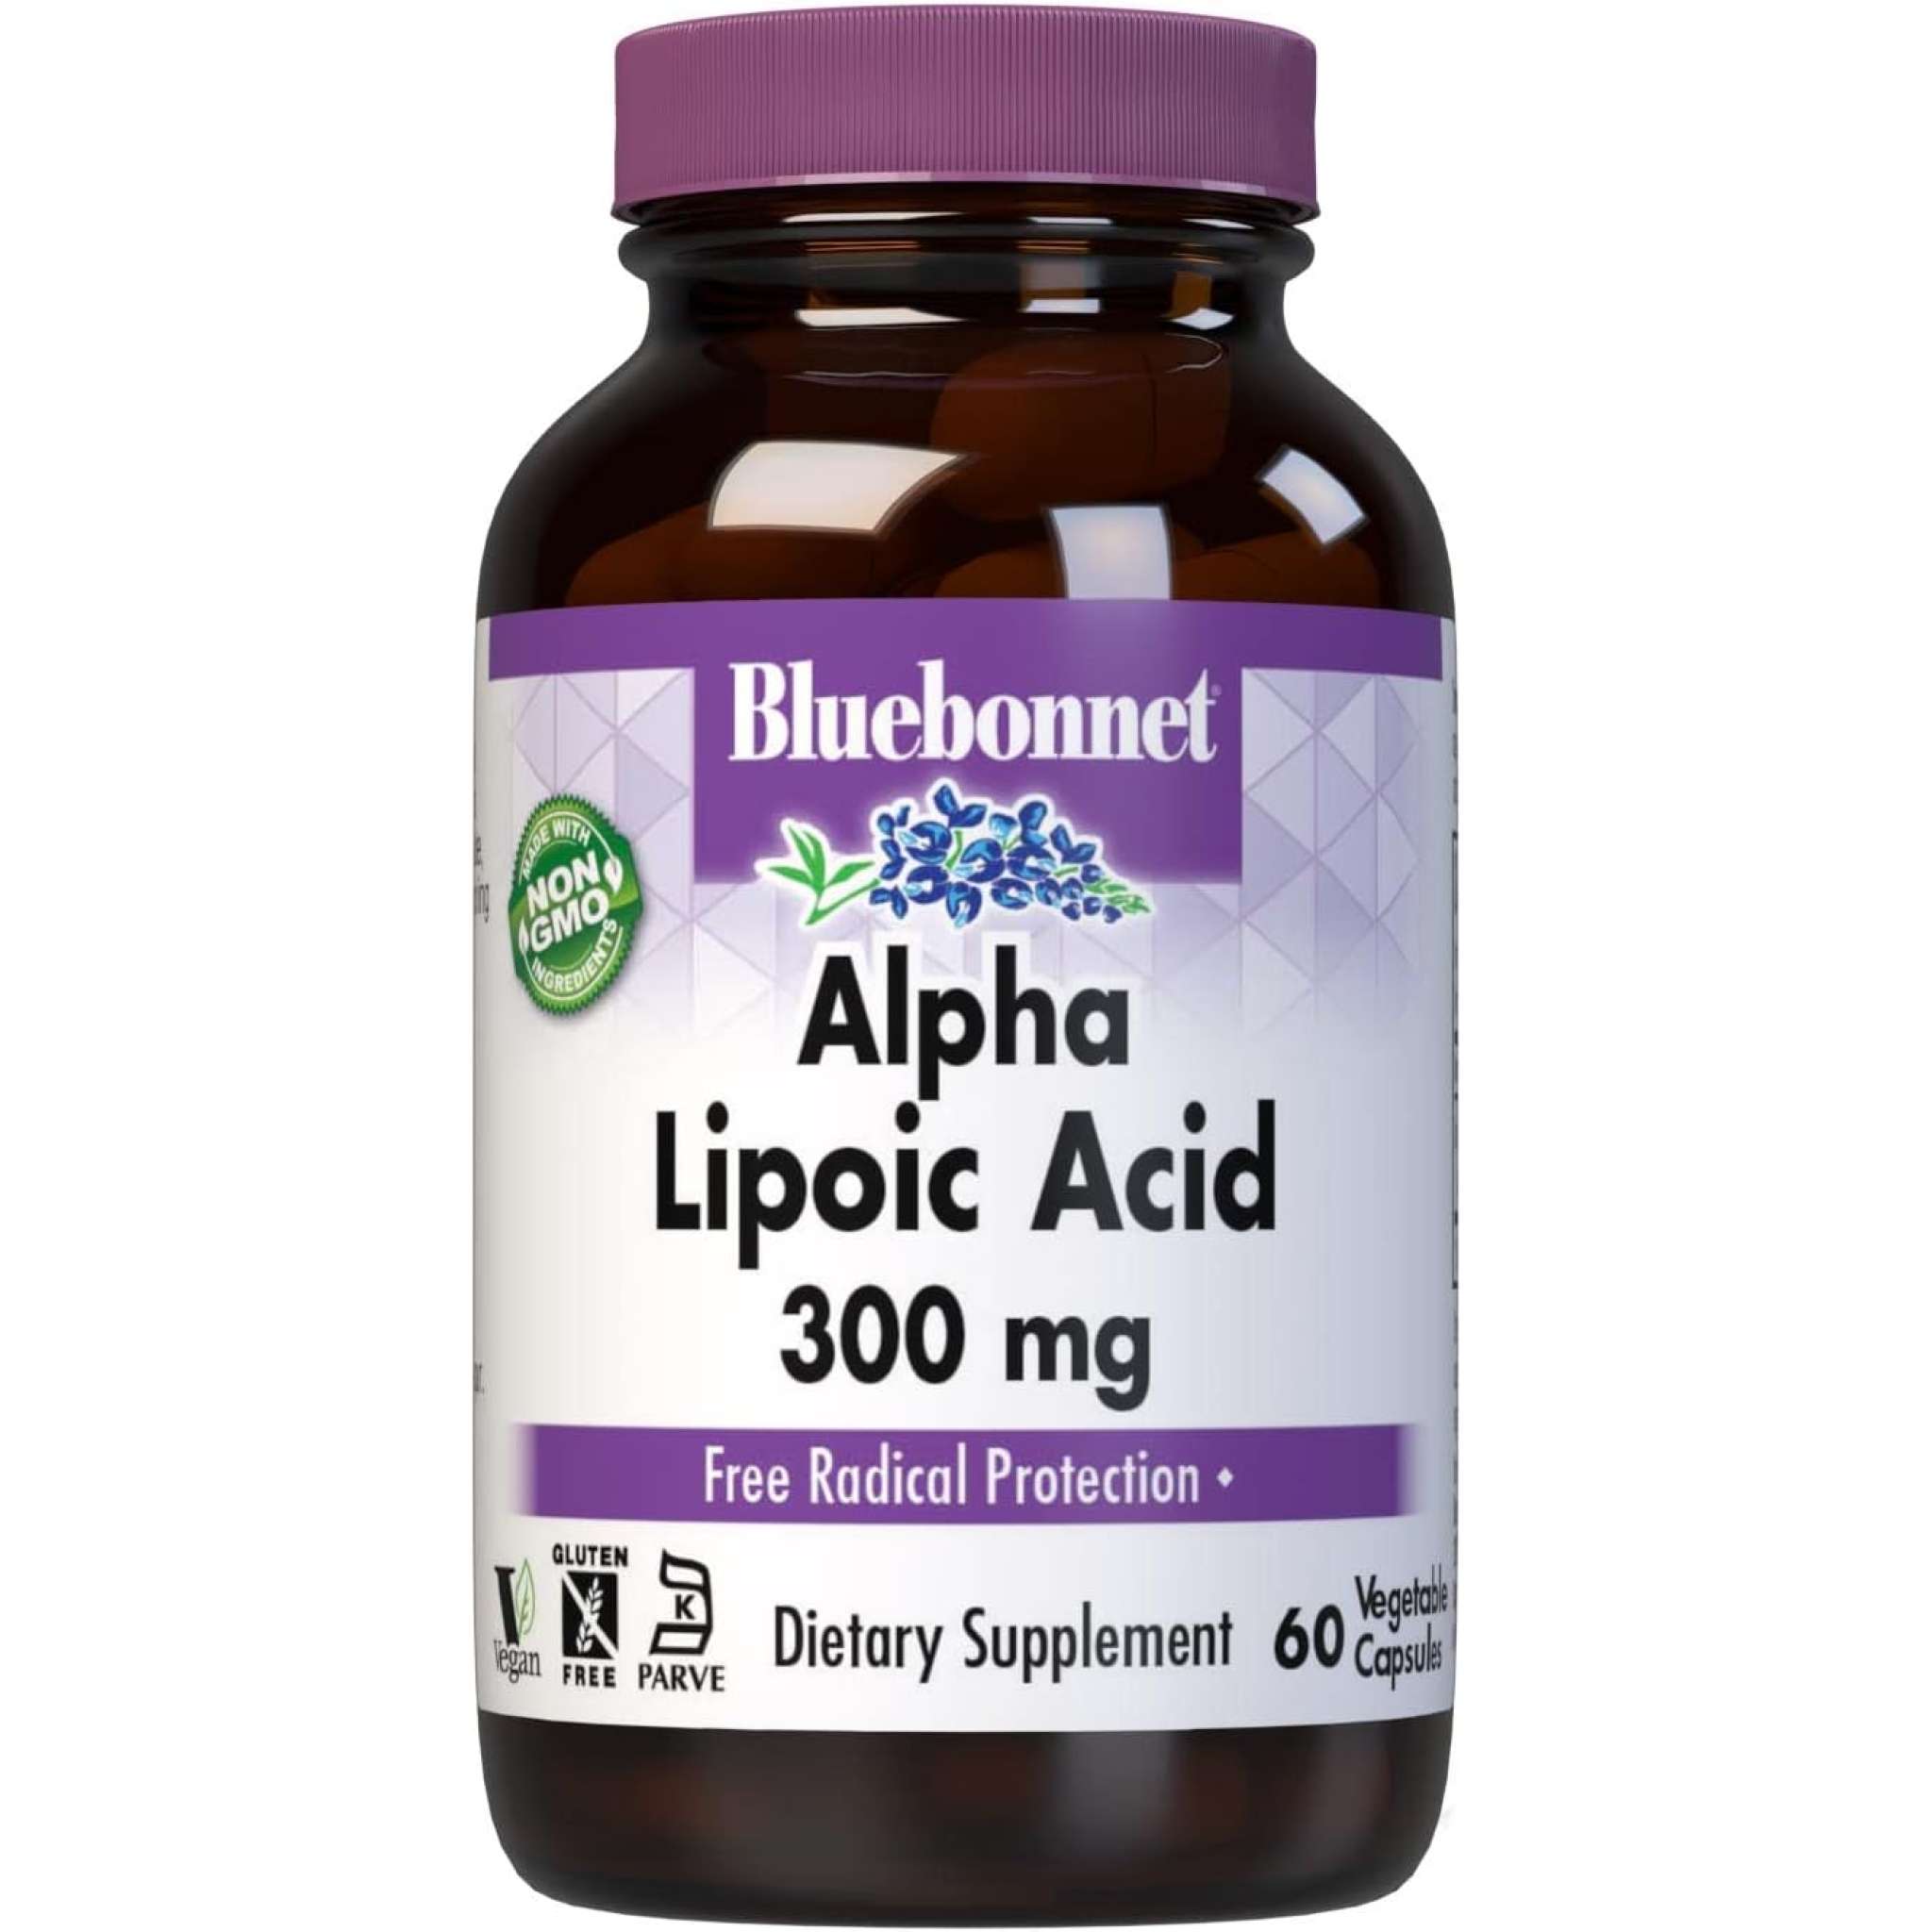 Bluebonnet - Lipoic Acid 300 mg Alpha